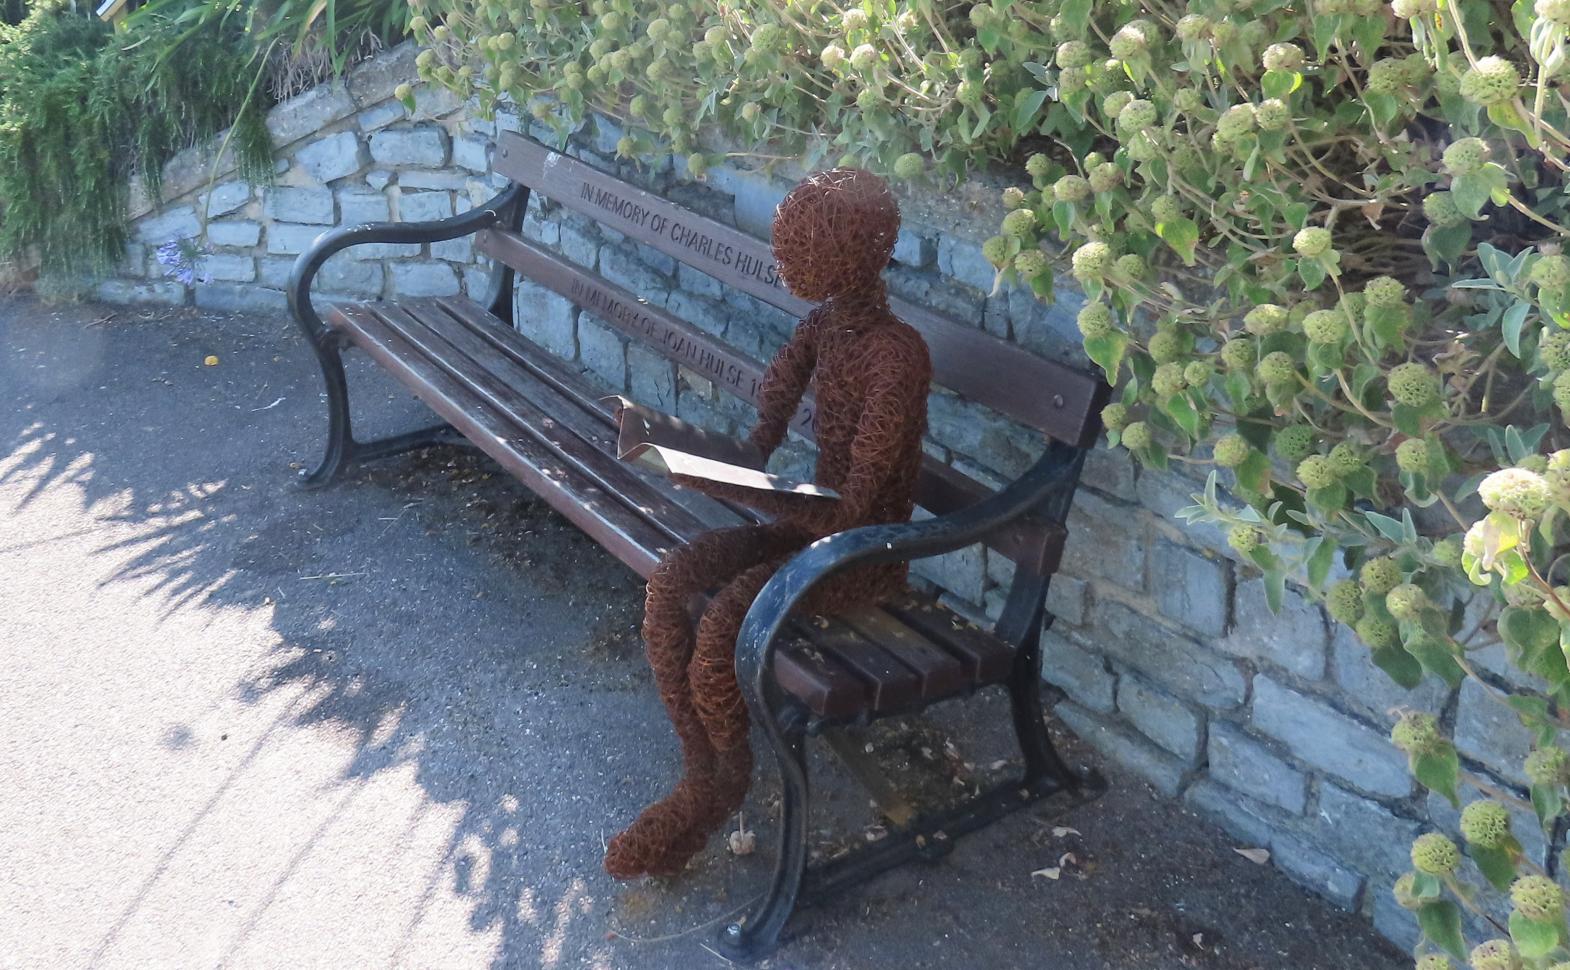 The Reader by Victoria Westaway, part of the Sculpture Trail in Langmoor Gardens, Lyme Regis